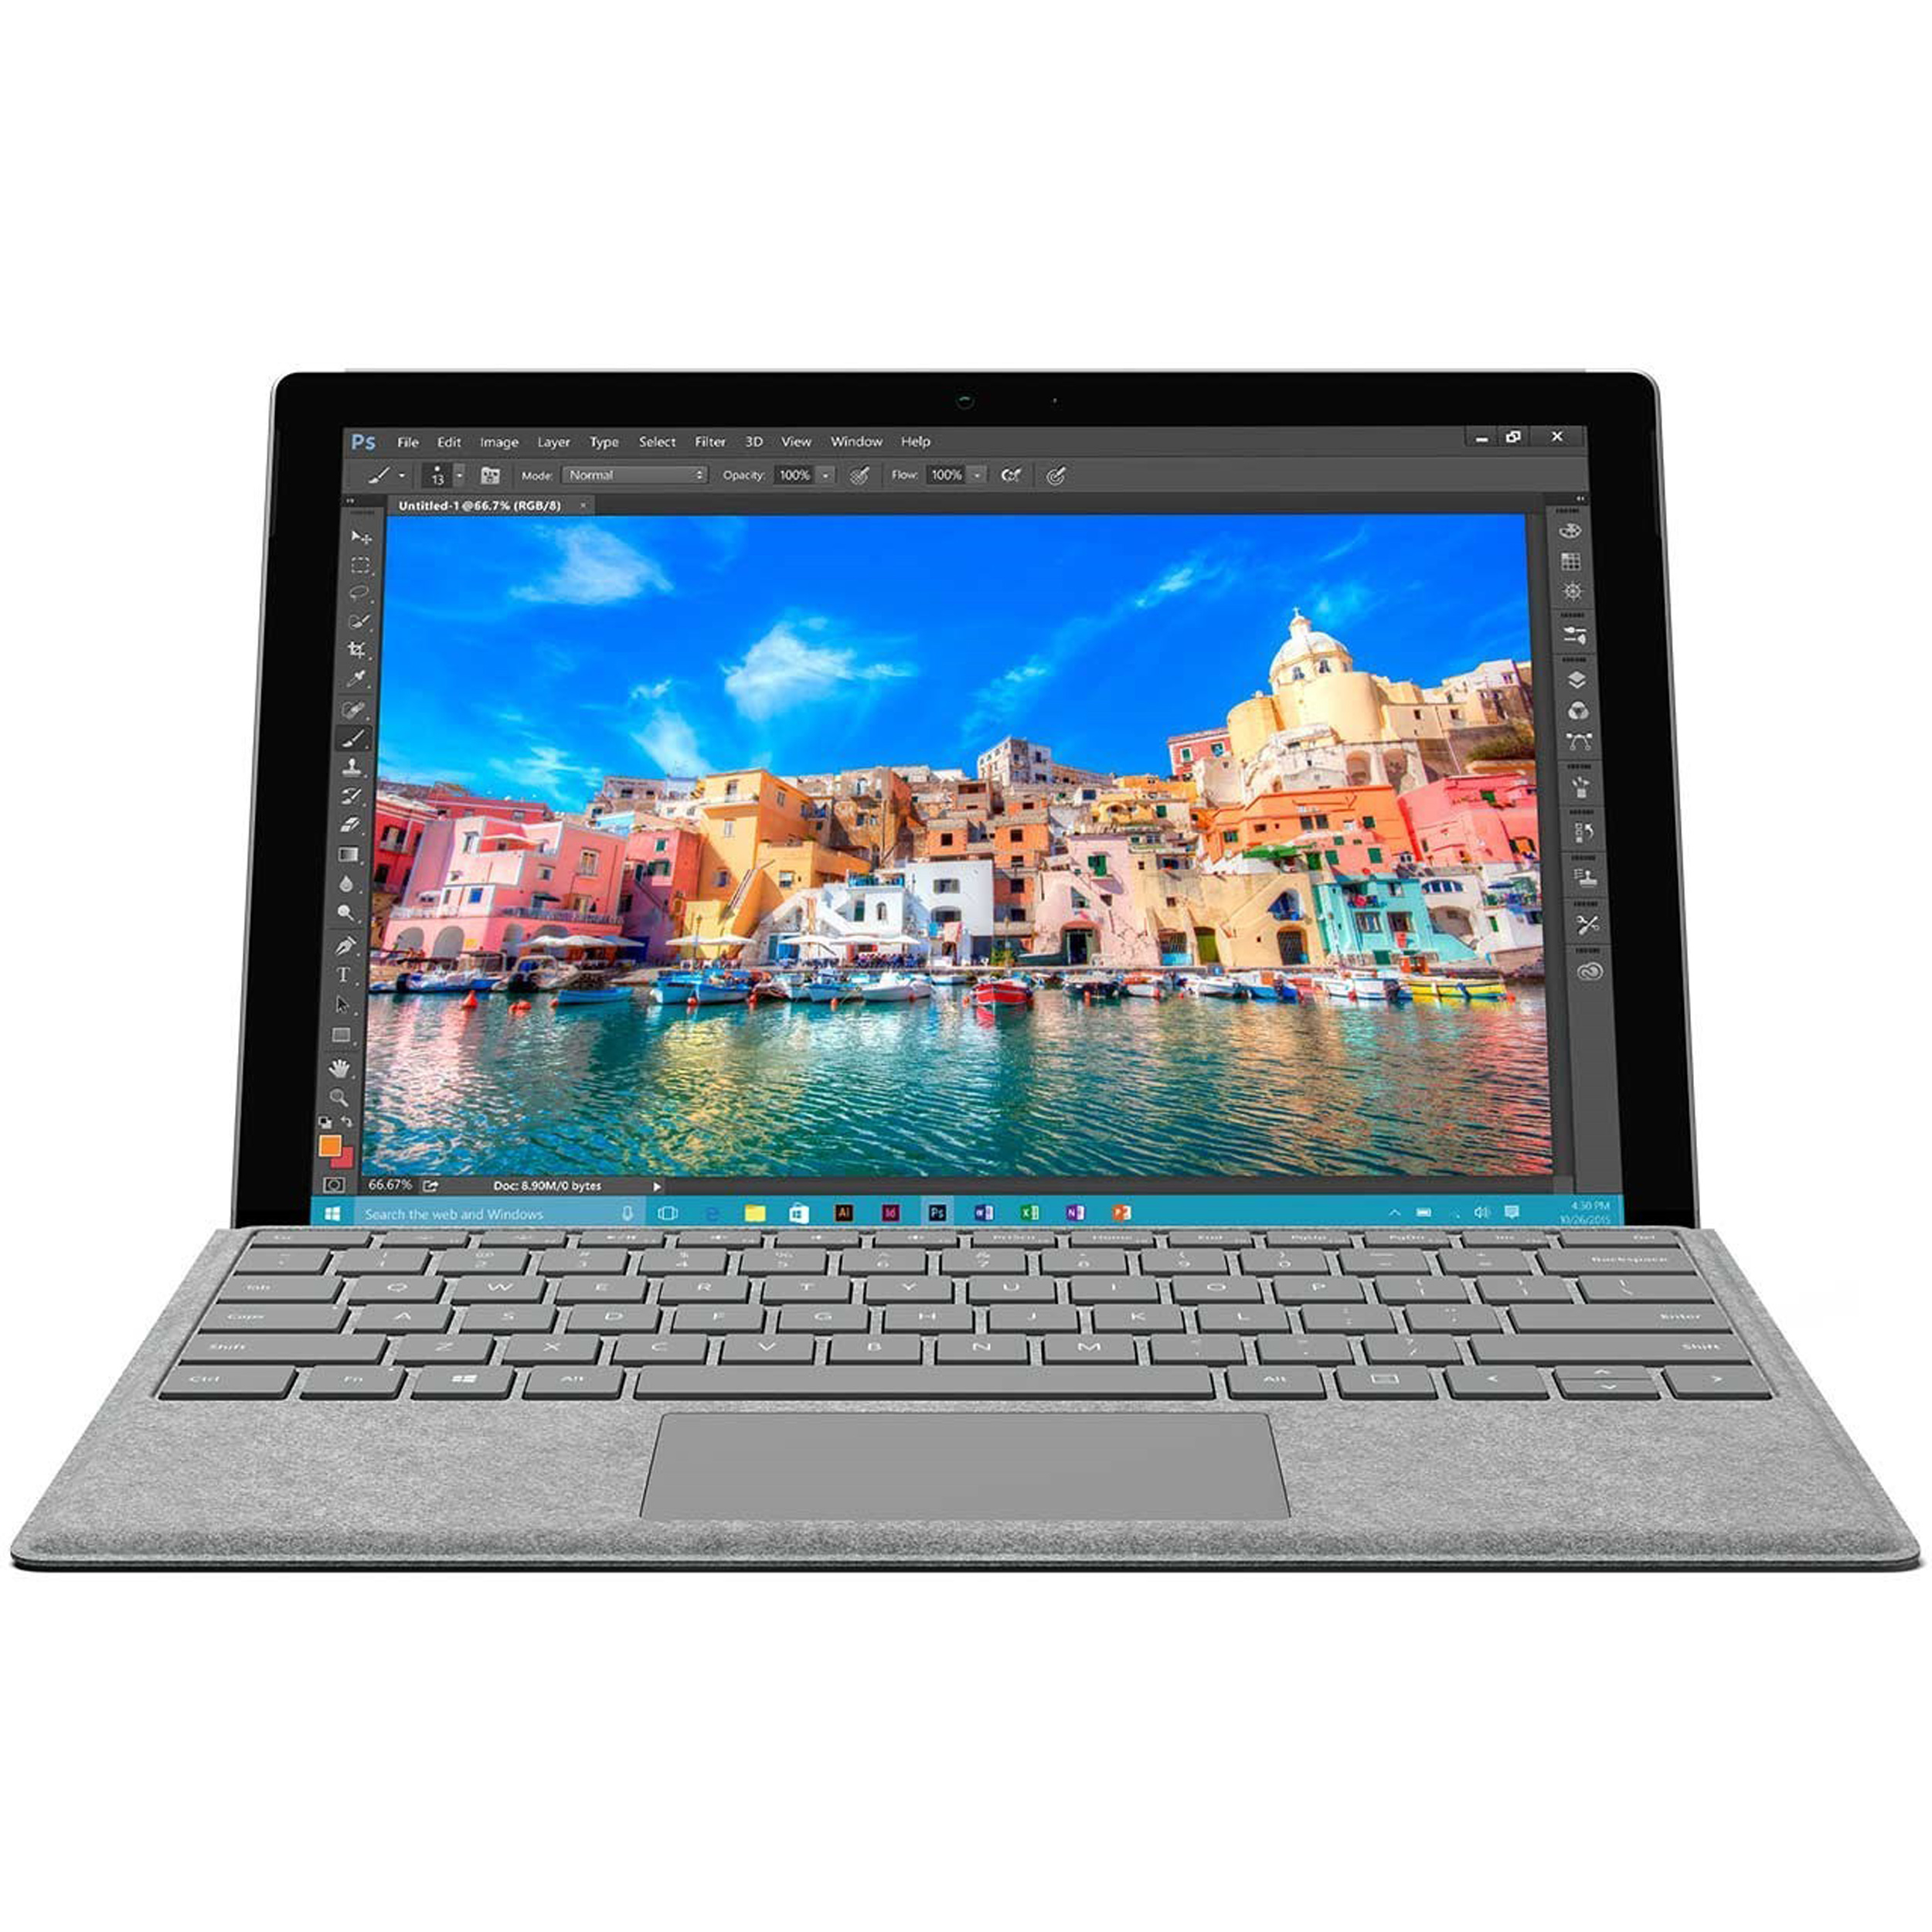 تبلت مایکروسافت مدل Surface Pro 2017-A به همراه کیبورد Silver Signature - ظرفیت 128 گیگابایت